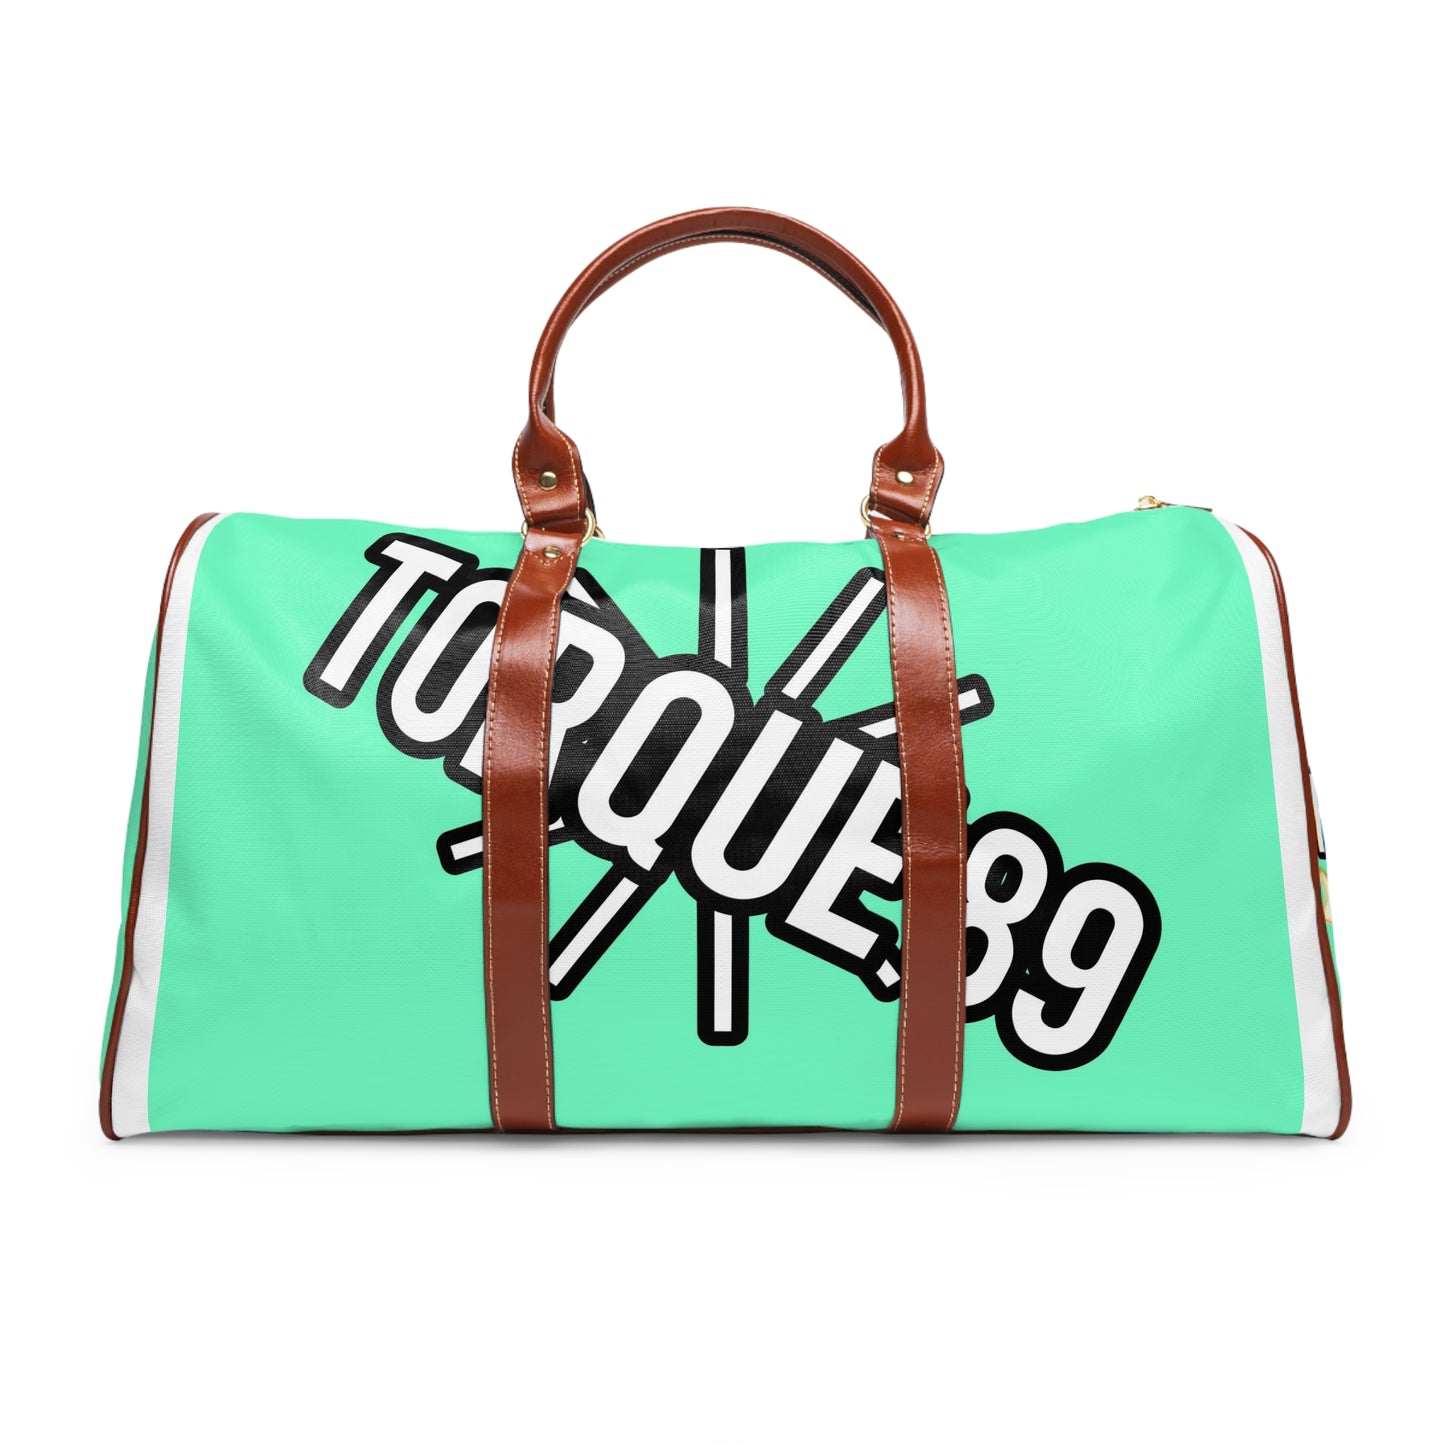 Torque 897/ Horsepower Waterproof Travel Bag